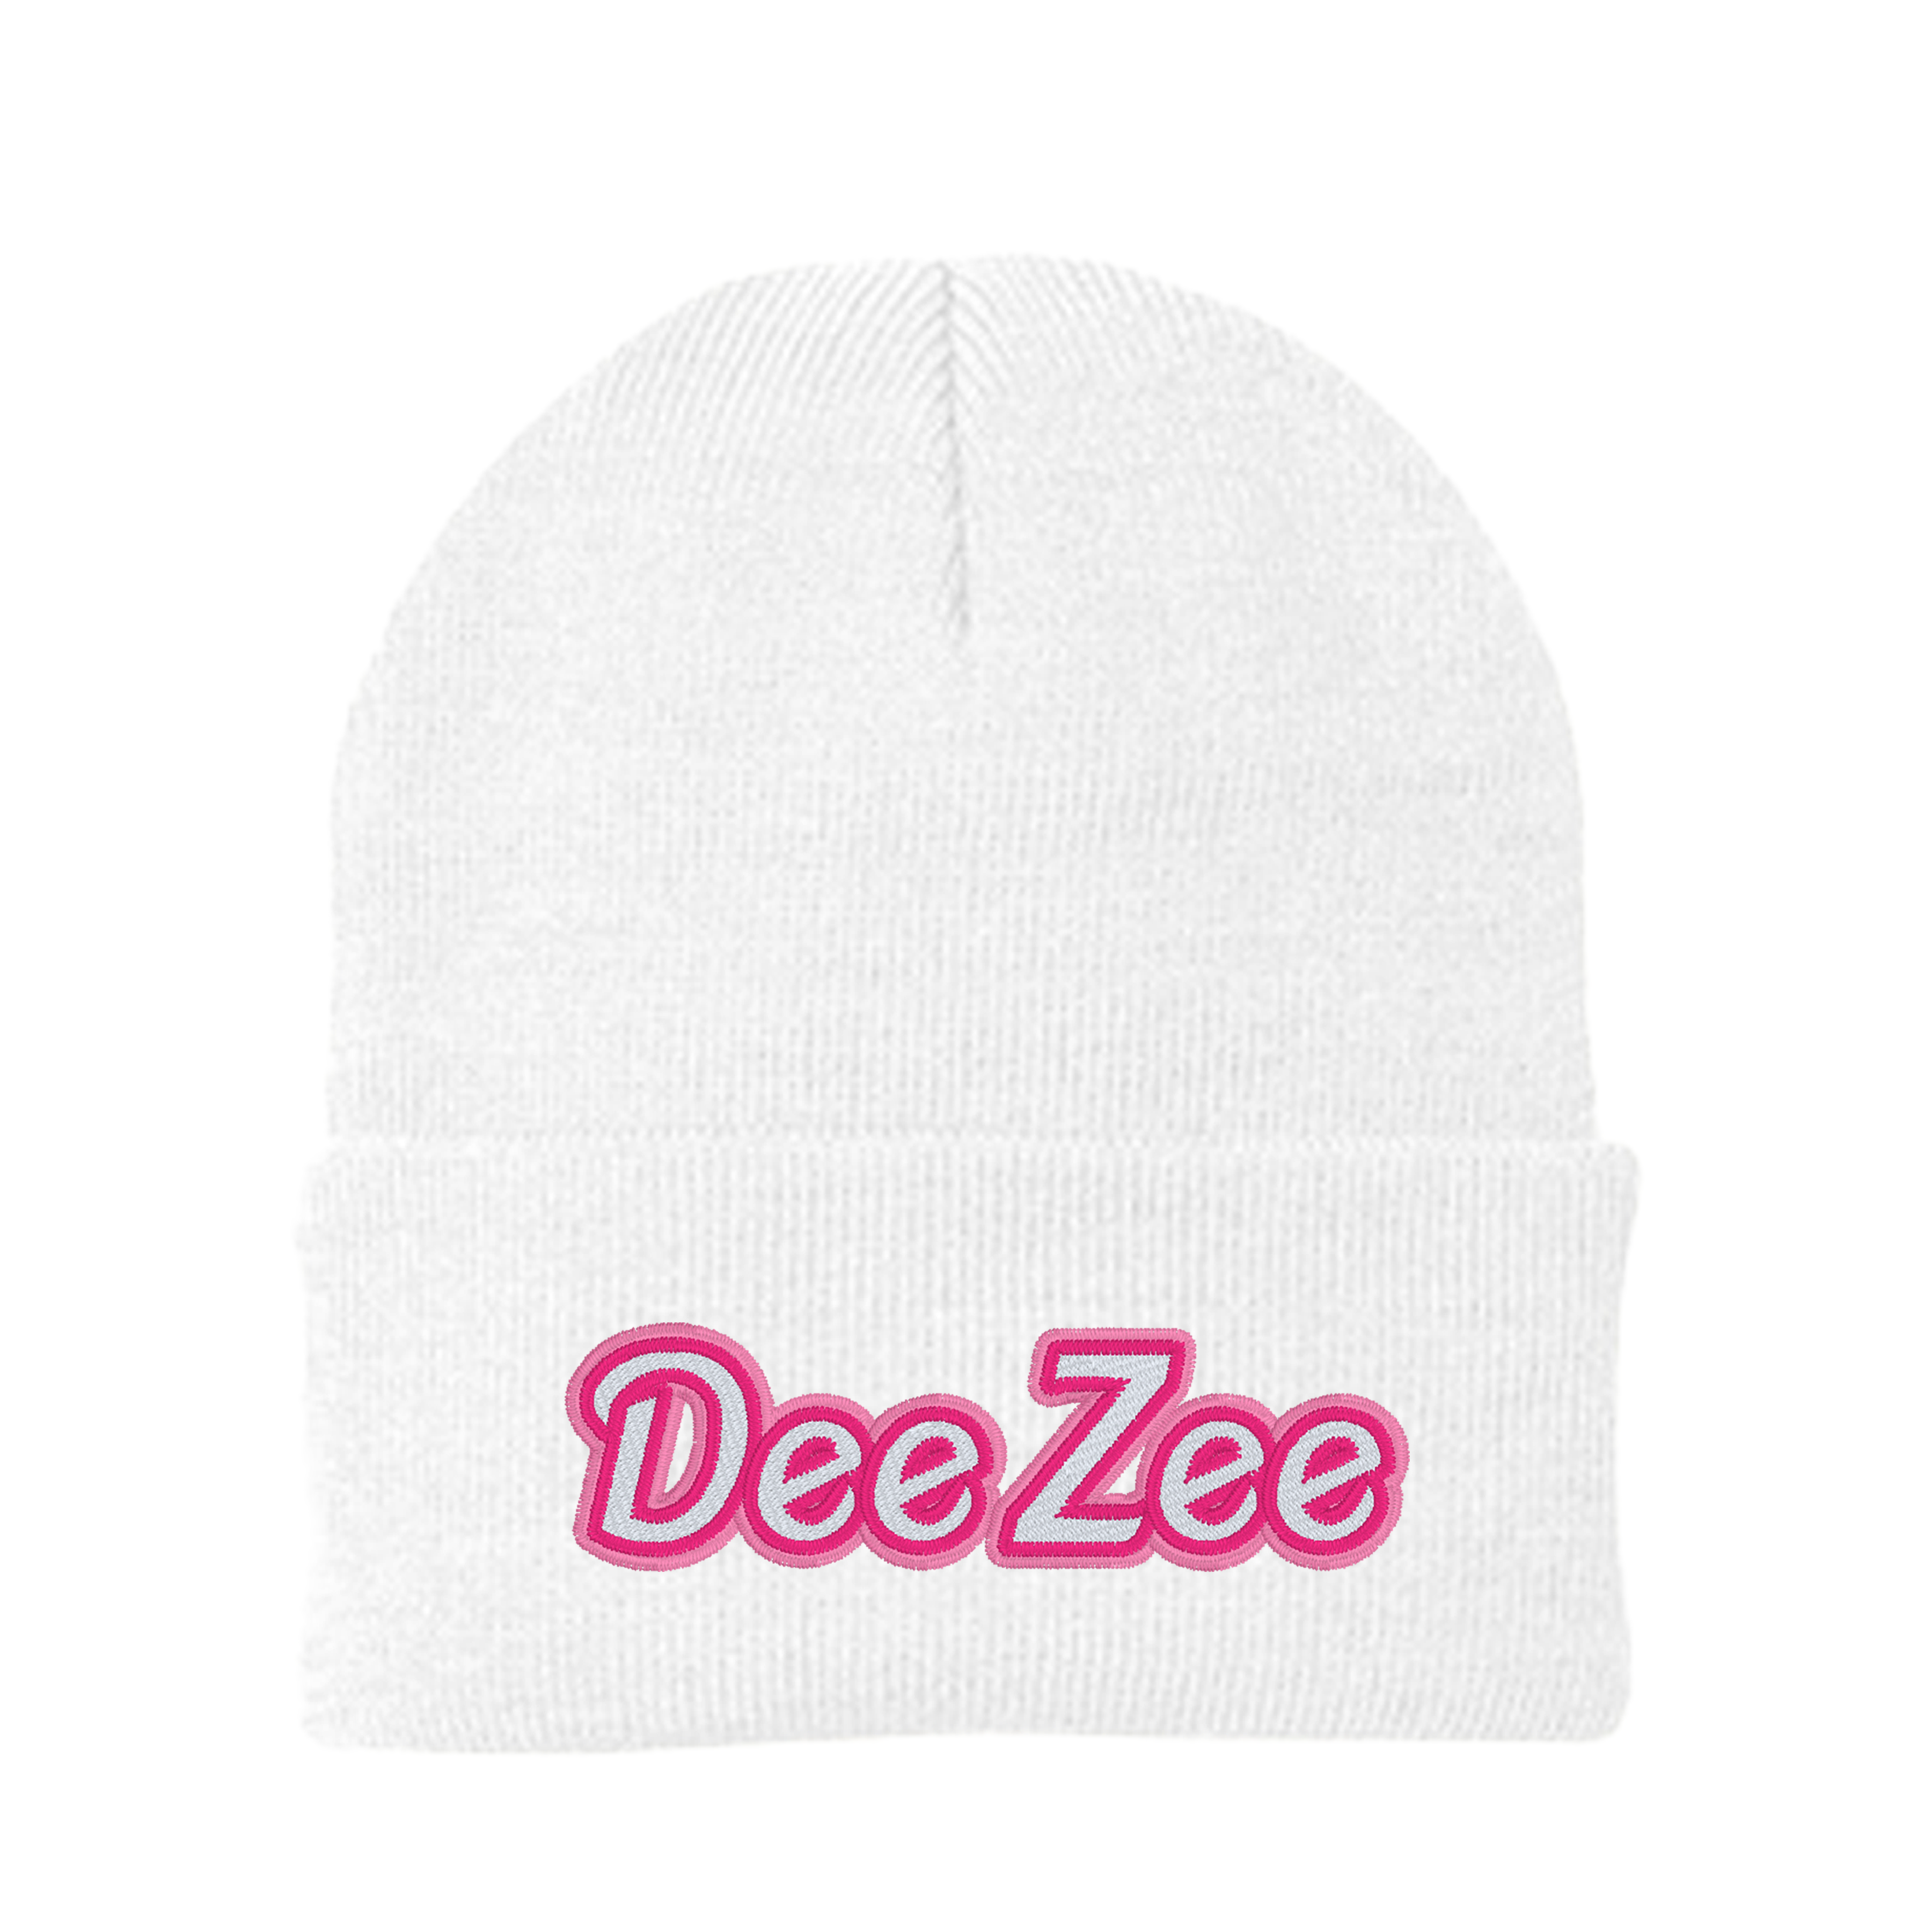 Delta Zeta Embroidered Beanie - Dee Zee Dream House